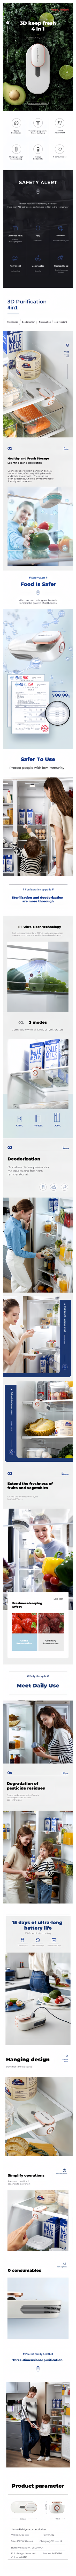 Morphy Richards Refrigerator Deodorizer MR2060 with Ozone Sterilization